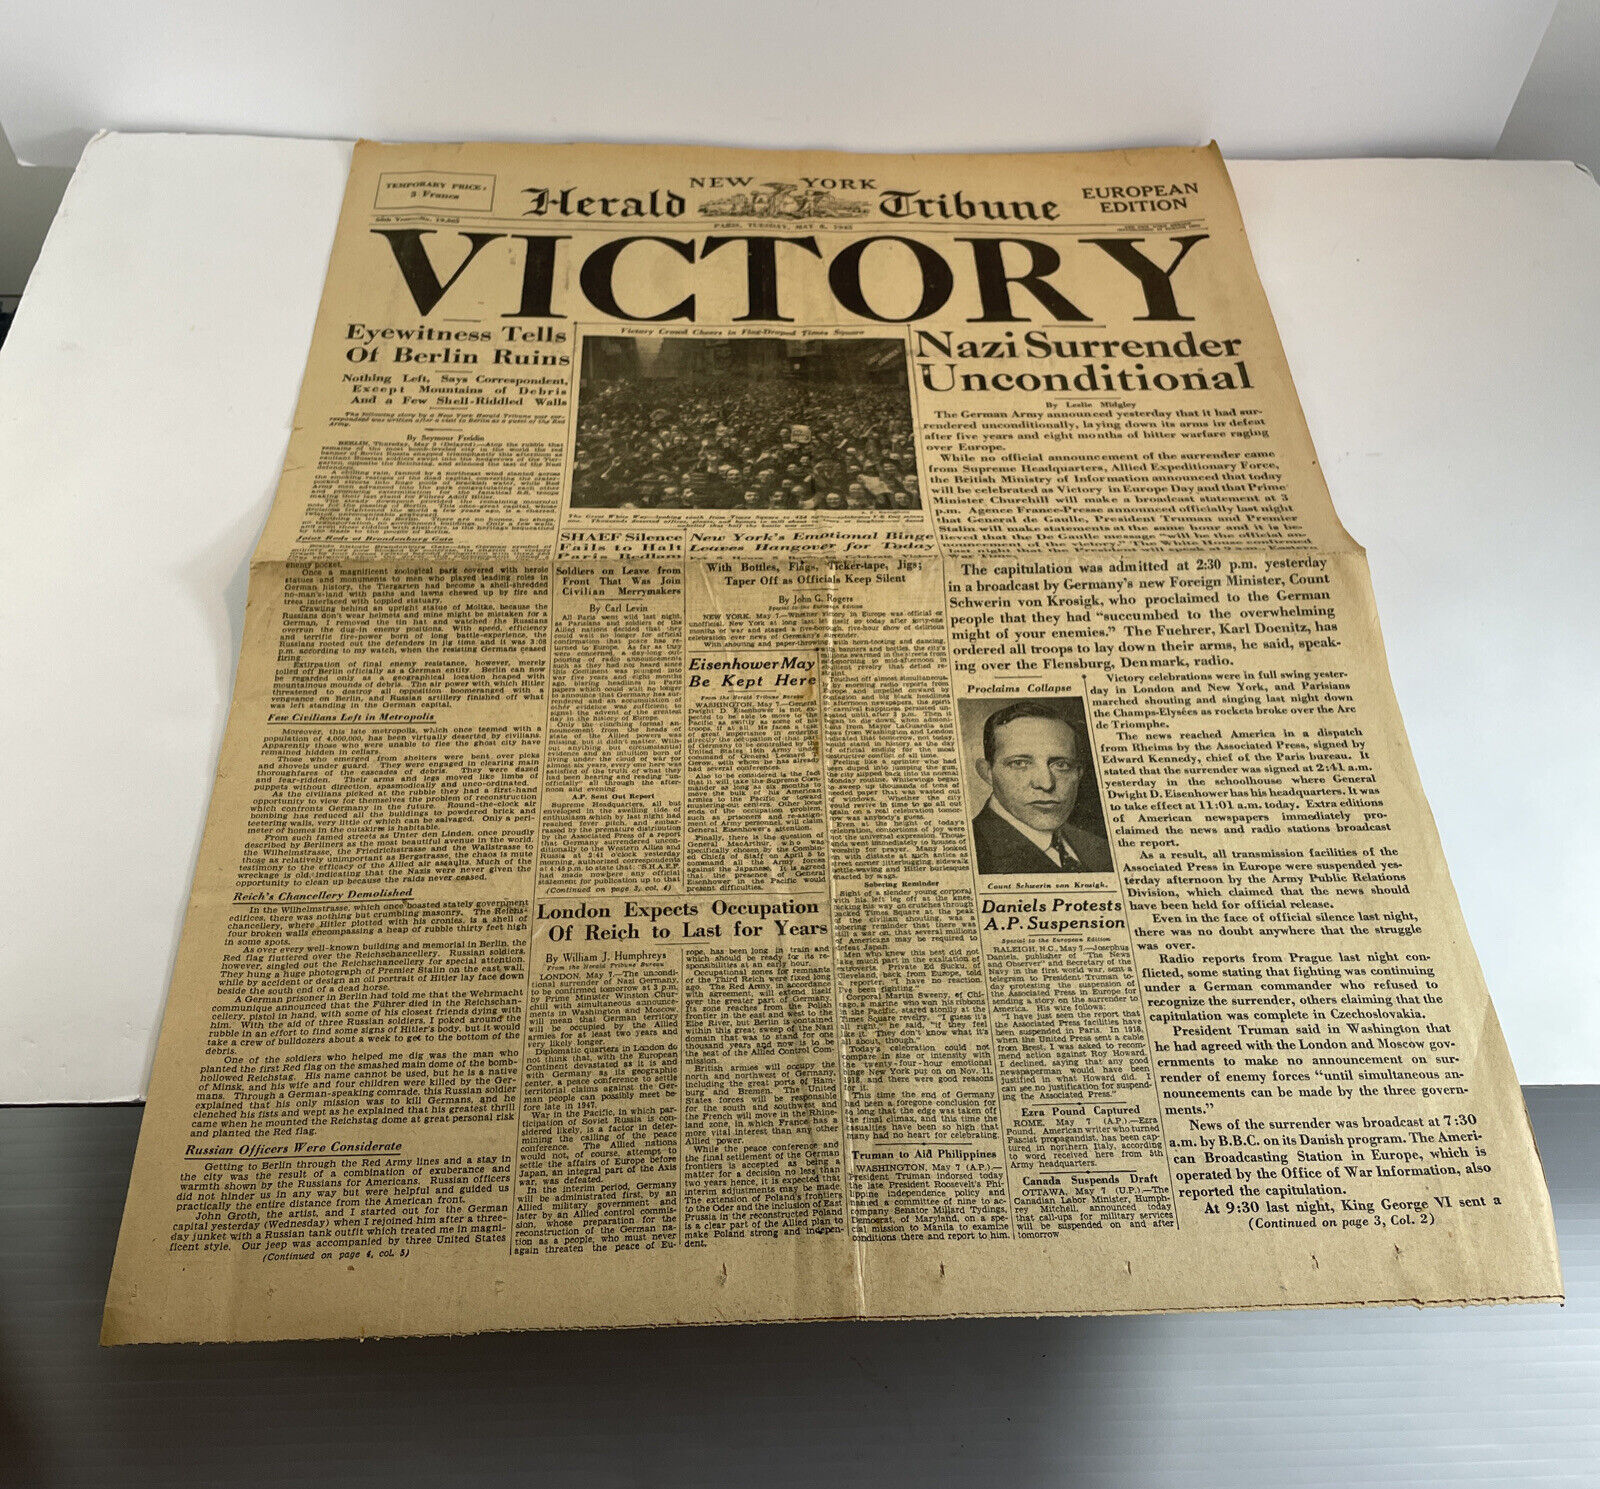 ORIGINAL NEW YORK HERALD TRIBUNE Paris European Edition VICTORY 8 MAY 1945 4 Pg